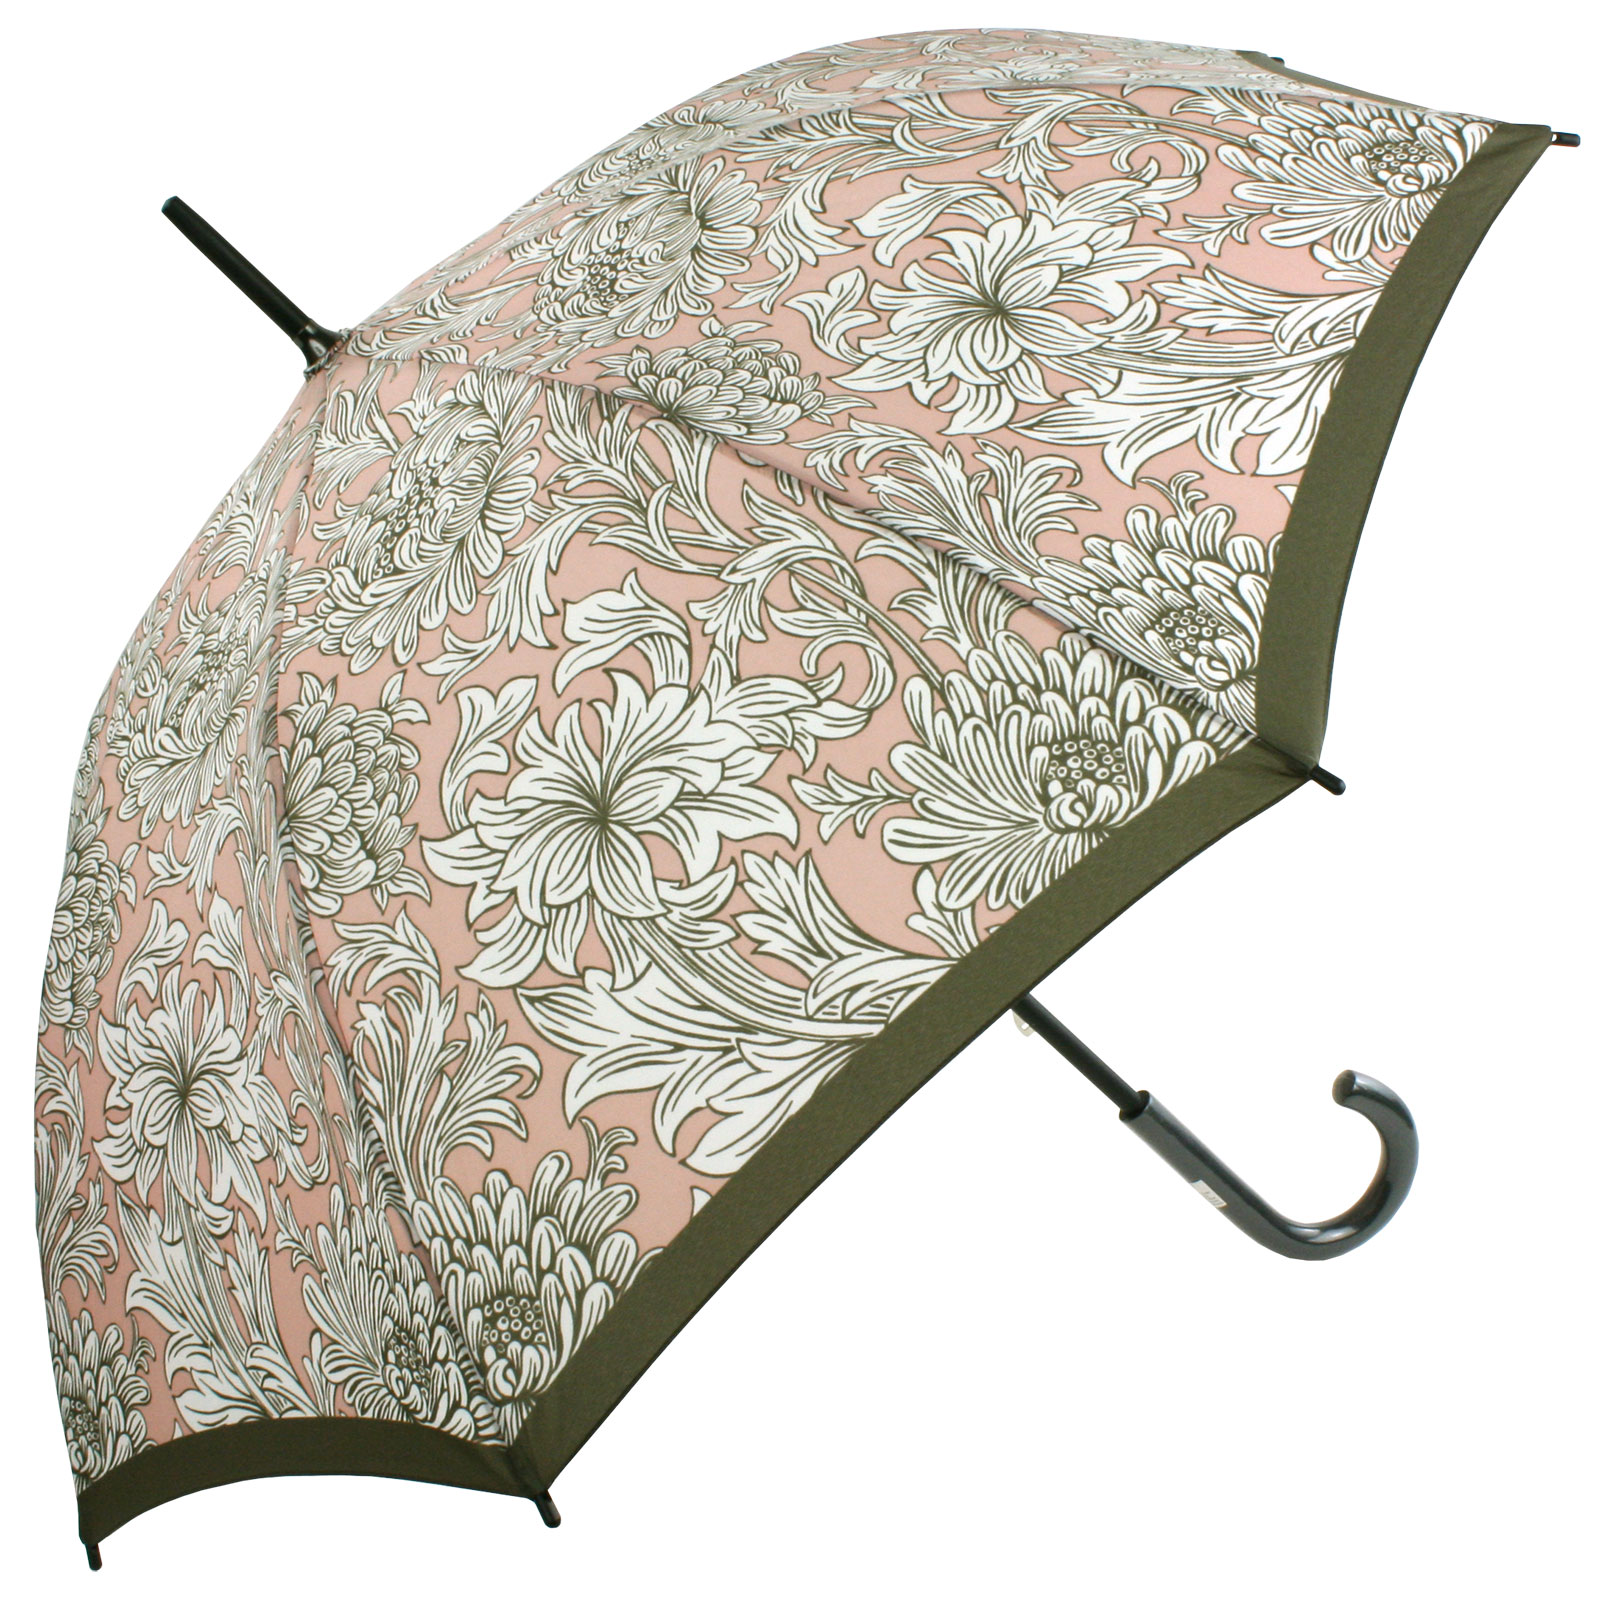 Morris & Co Kensington UVP Long Umbrella by Fulton - Cochineal Pink Chrysanthemum